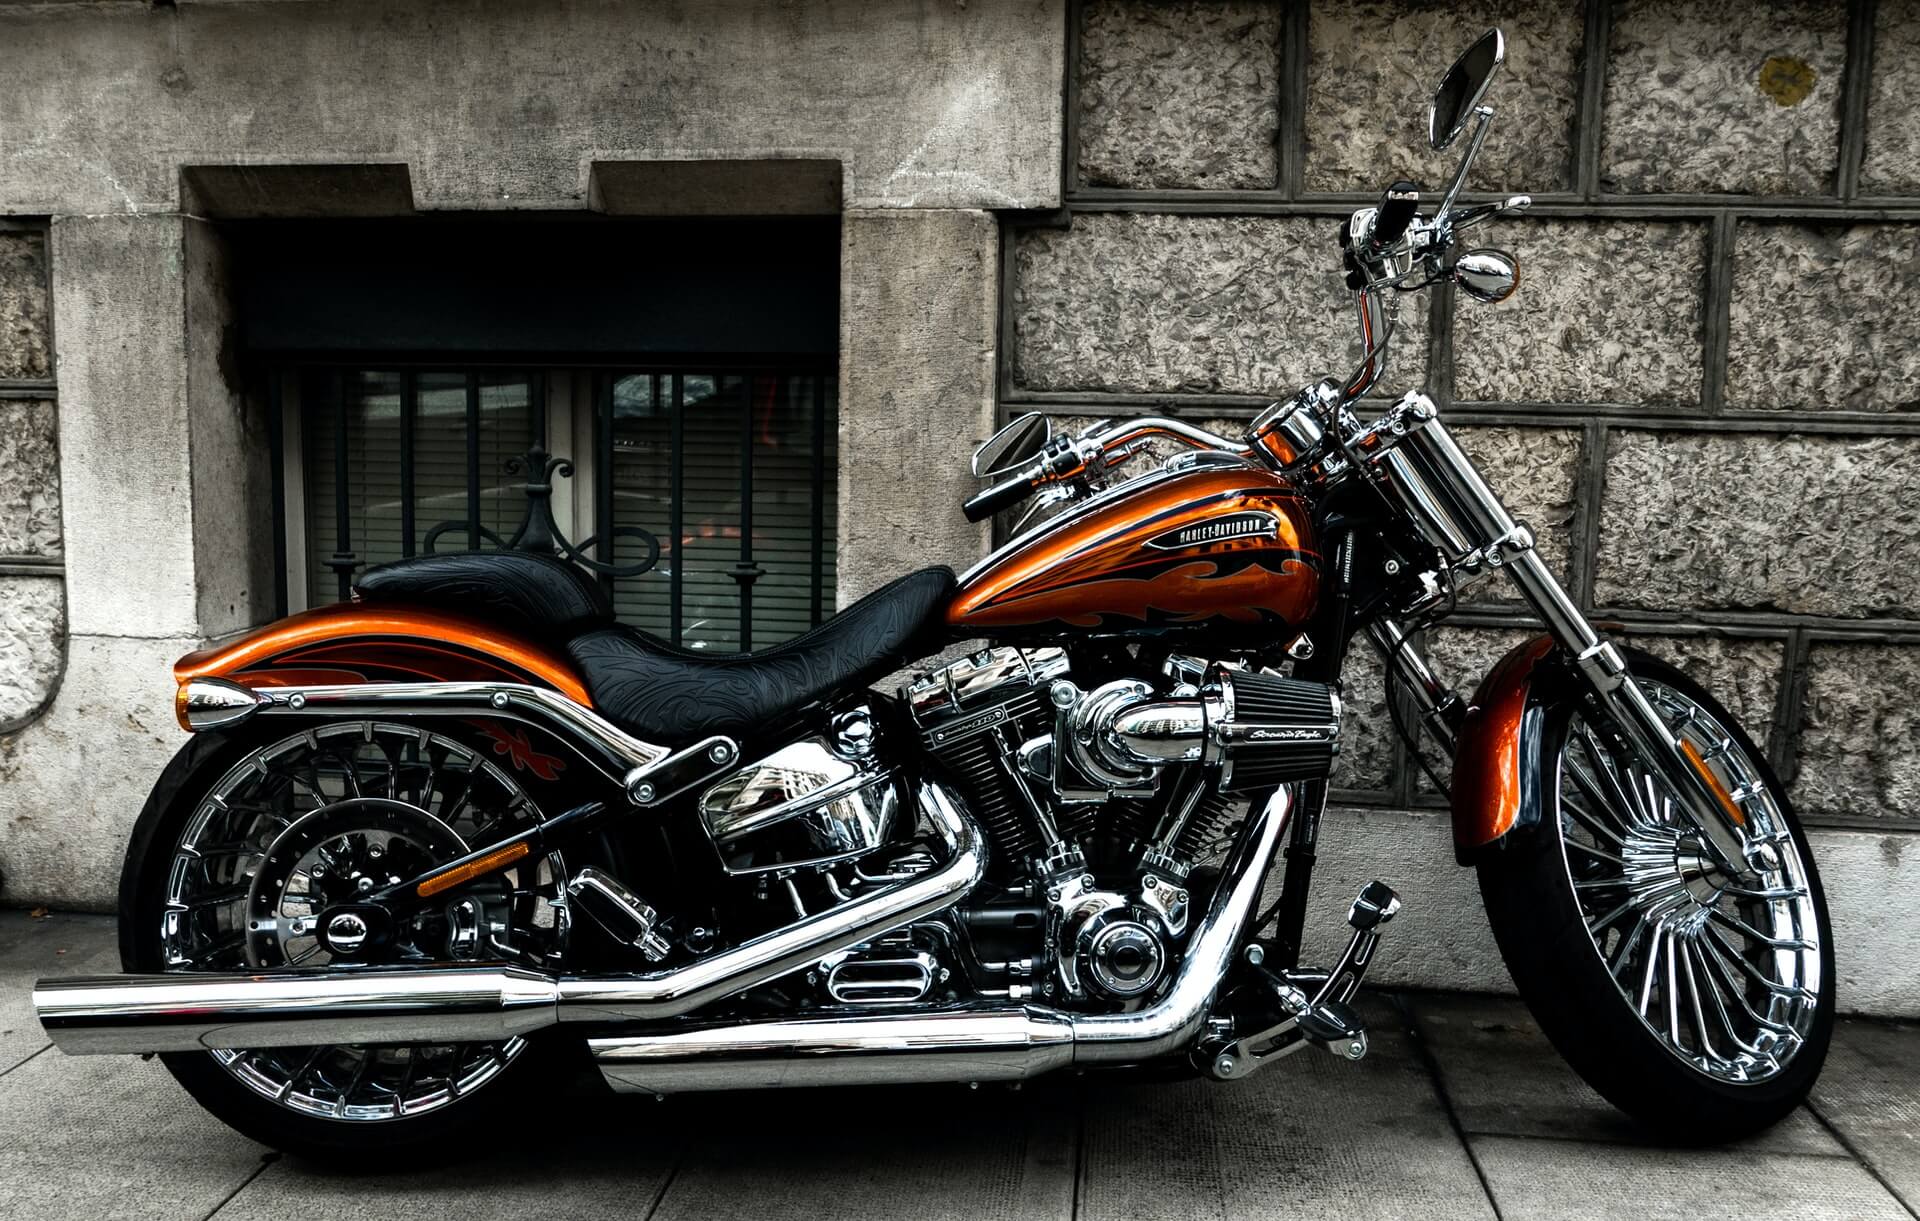 Harley motorcycle with custom double exhaust